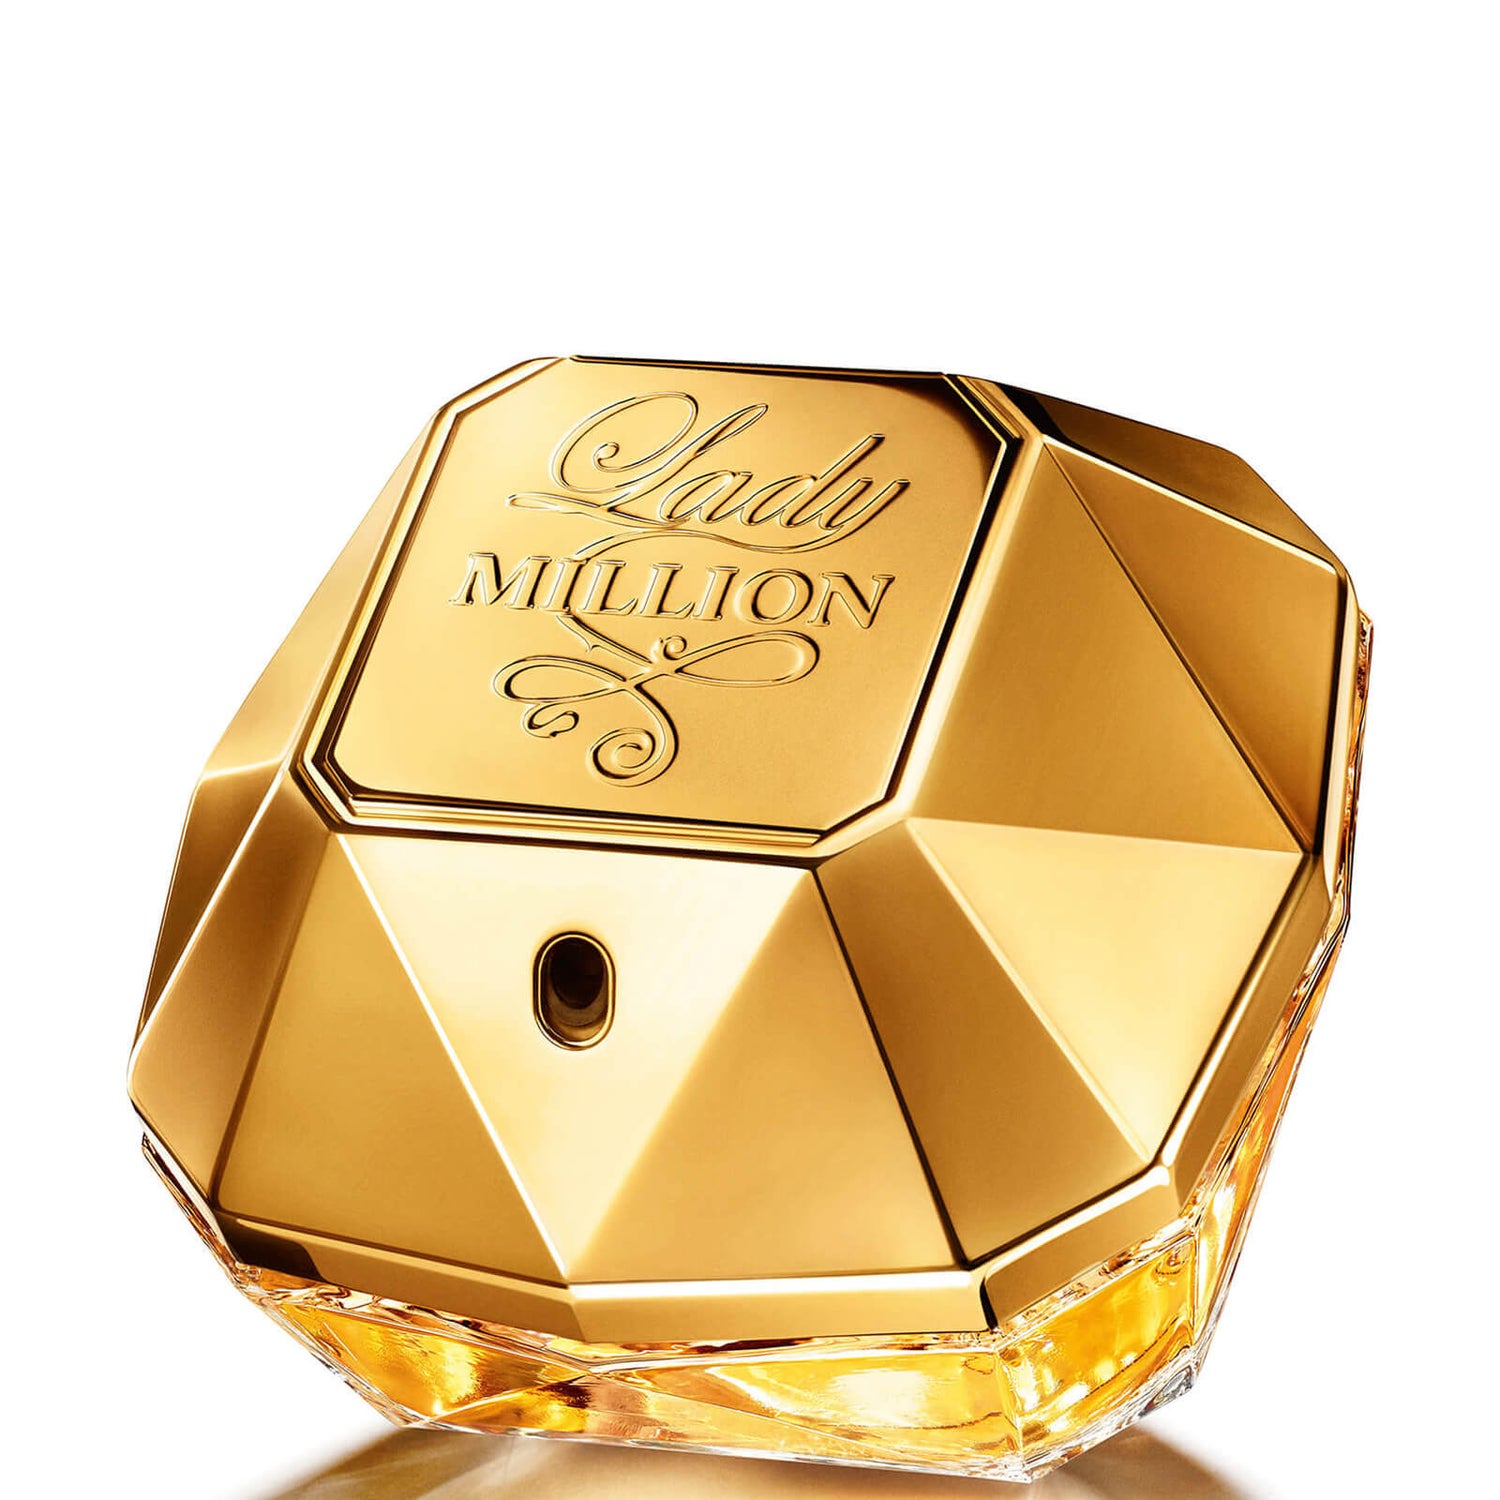 a continua Giotto Dibondon specificație  Lady Million Eau de Parfum da Paco Rabanne 80 ml - Entrega GRÁTIS